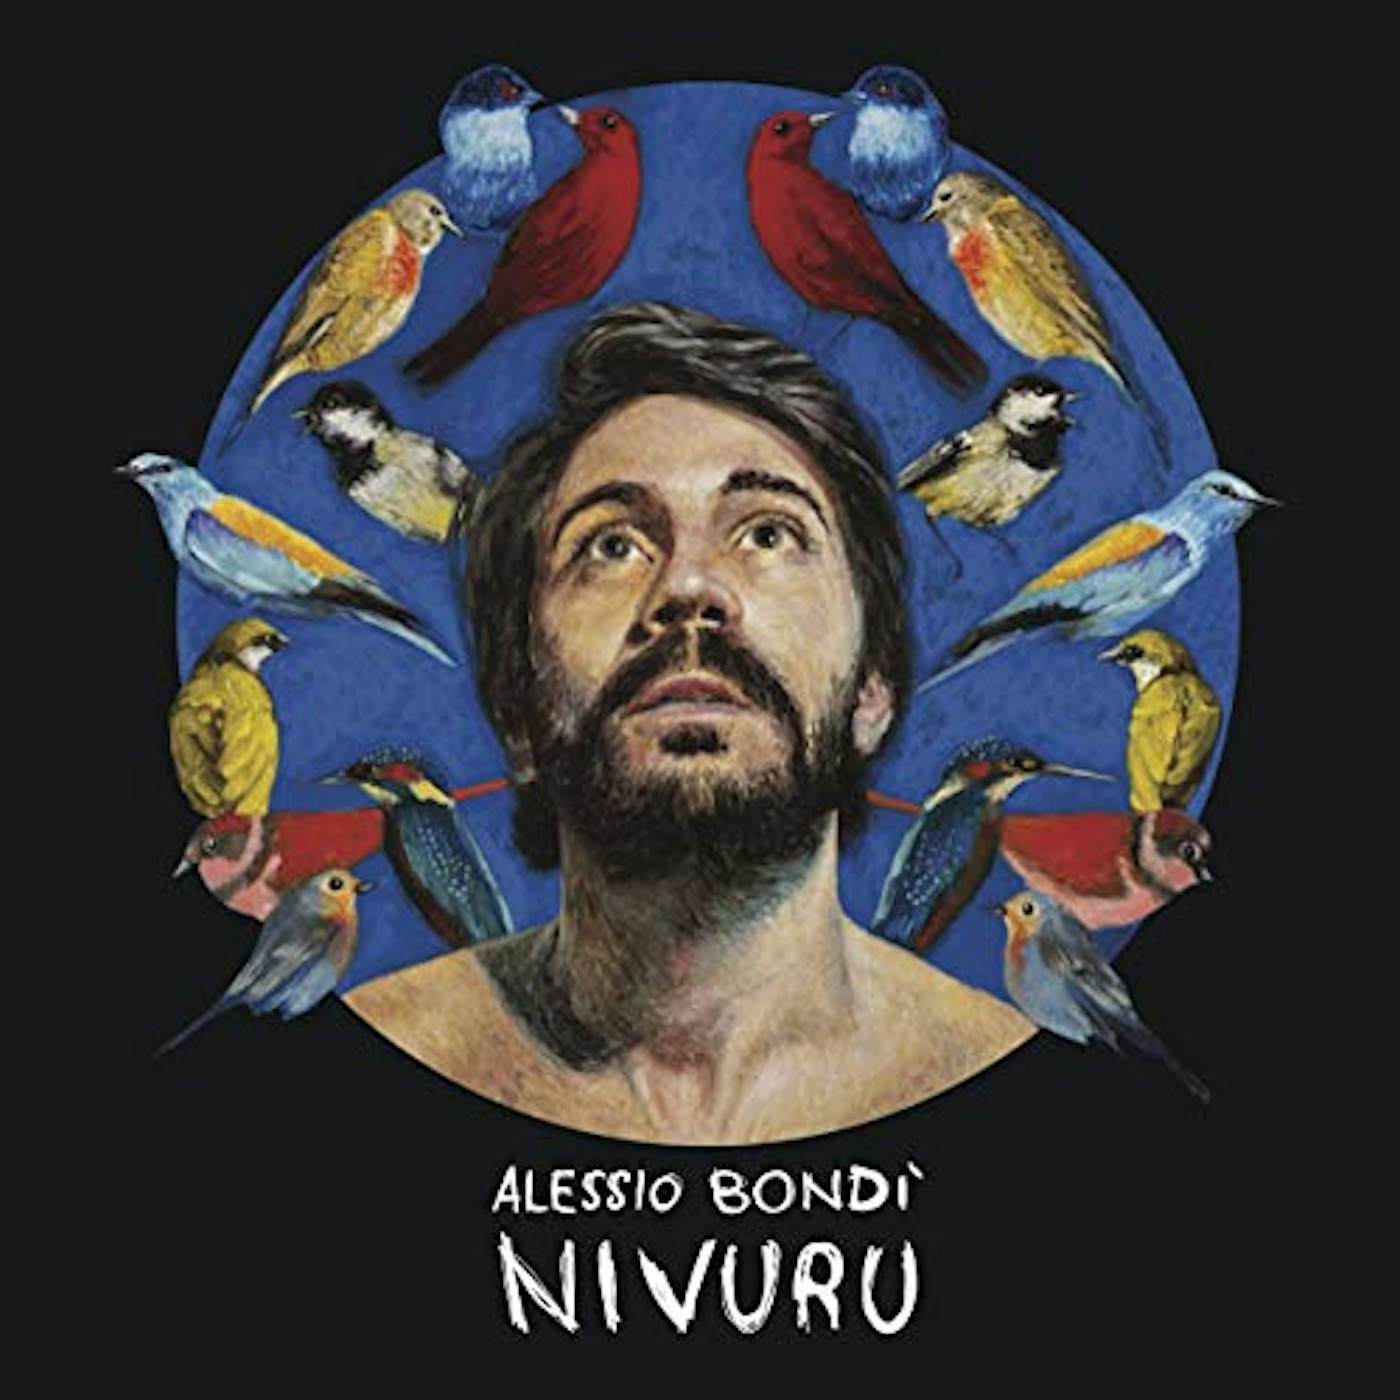 Alessio Bondì Nivuru Vinyl Record